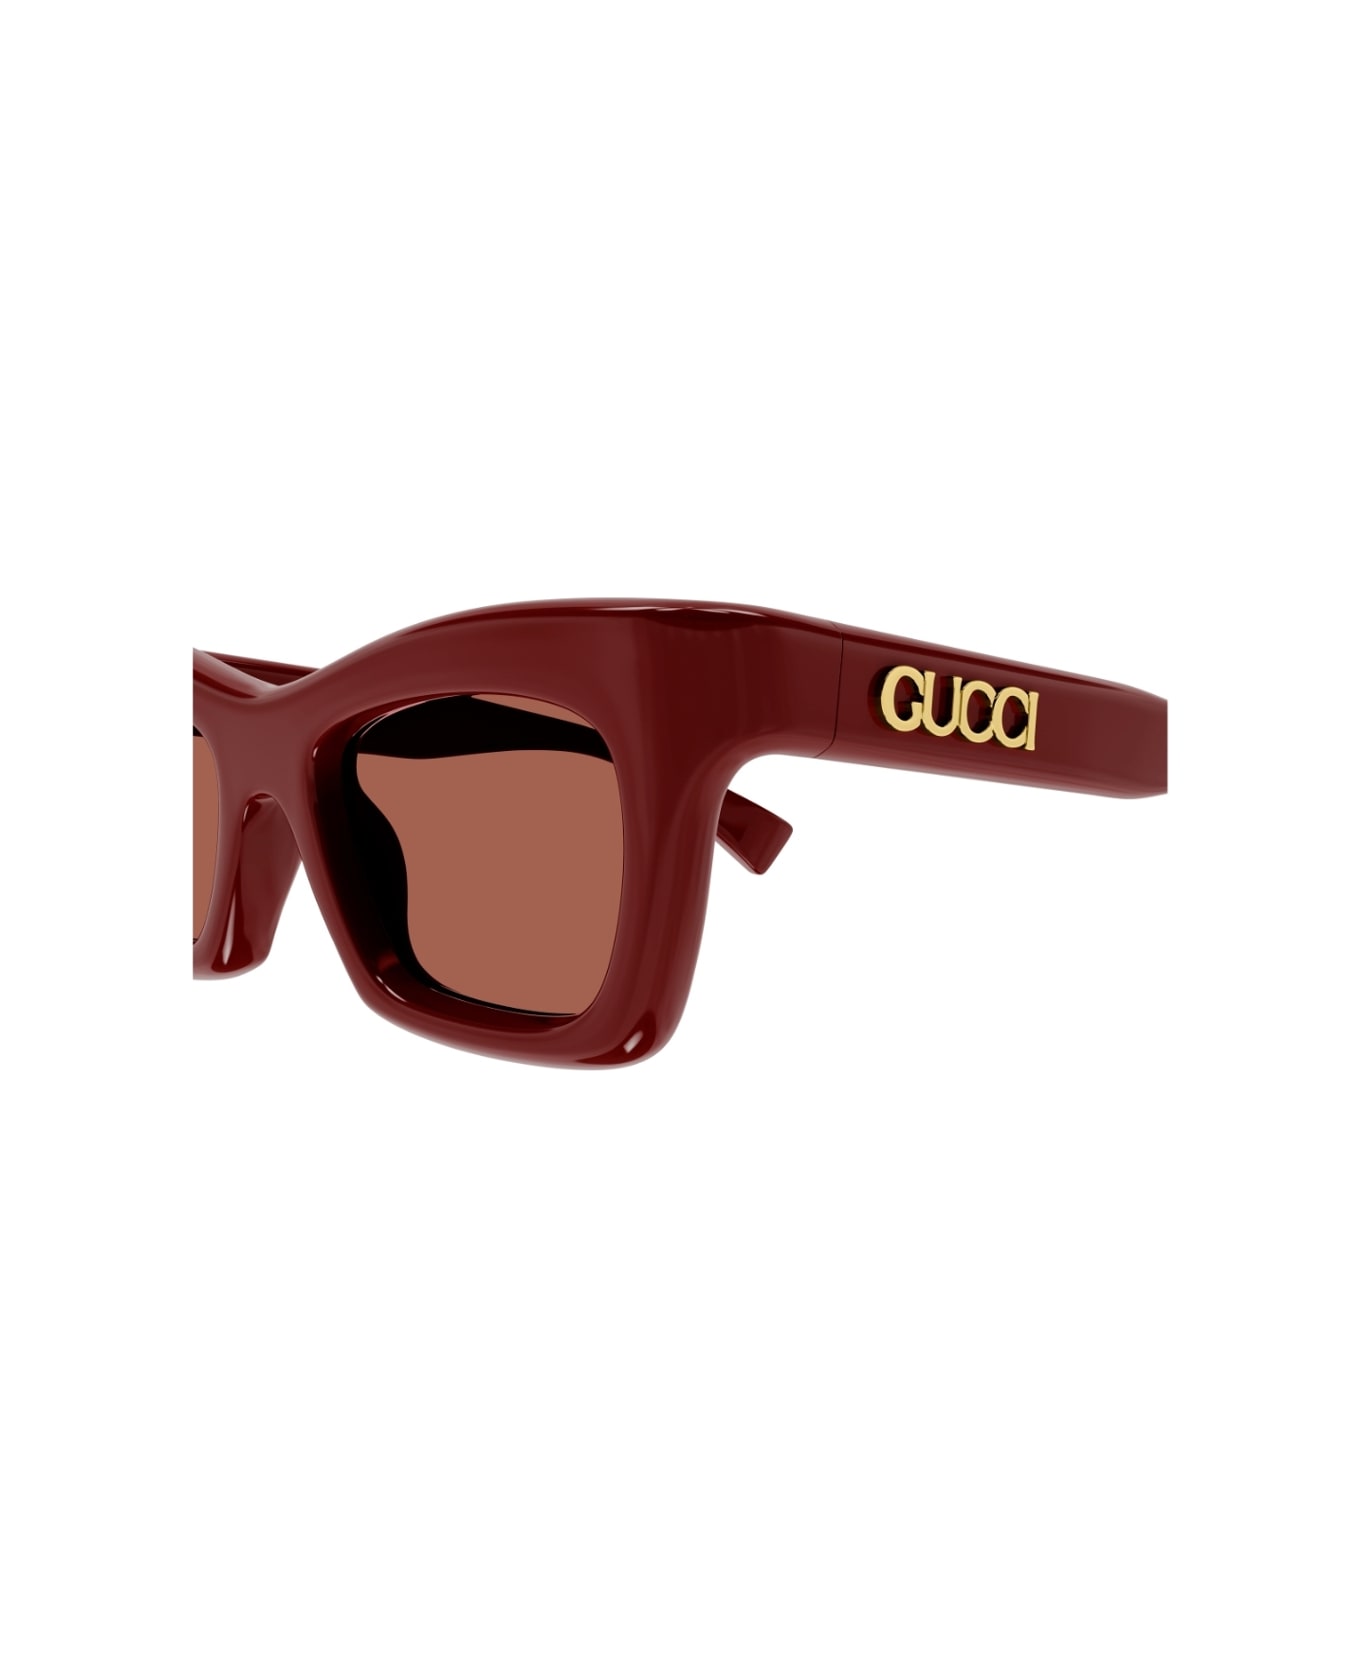 Gucci Eyewear GG1773s 003 Sunglasses サングラス